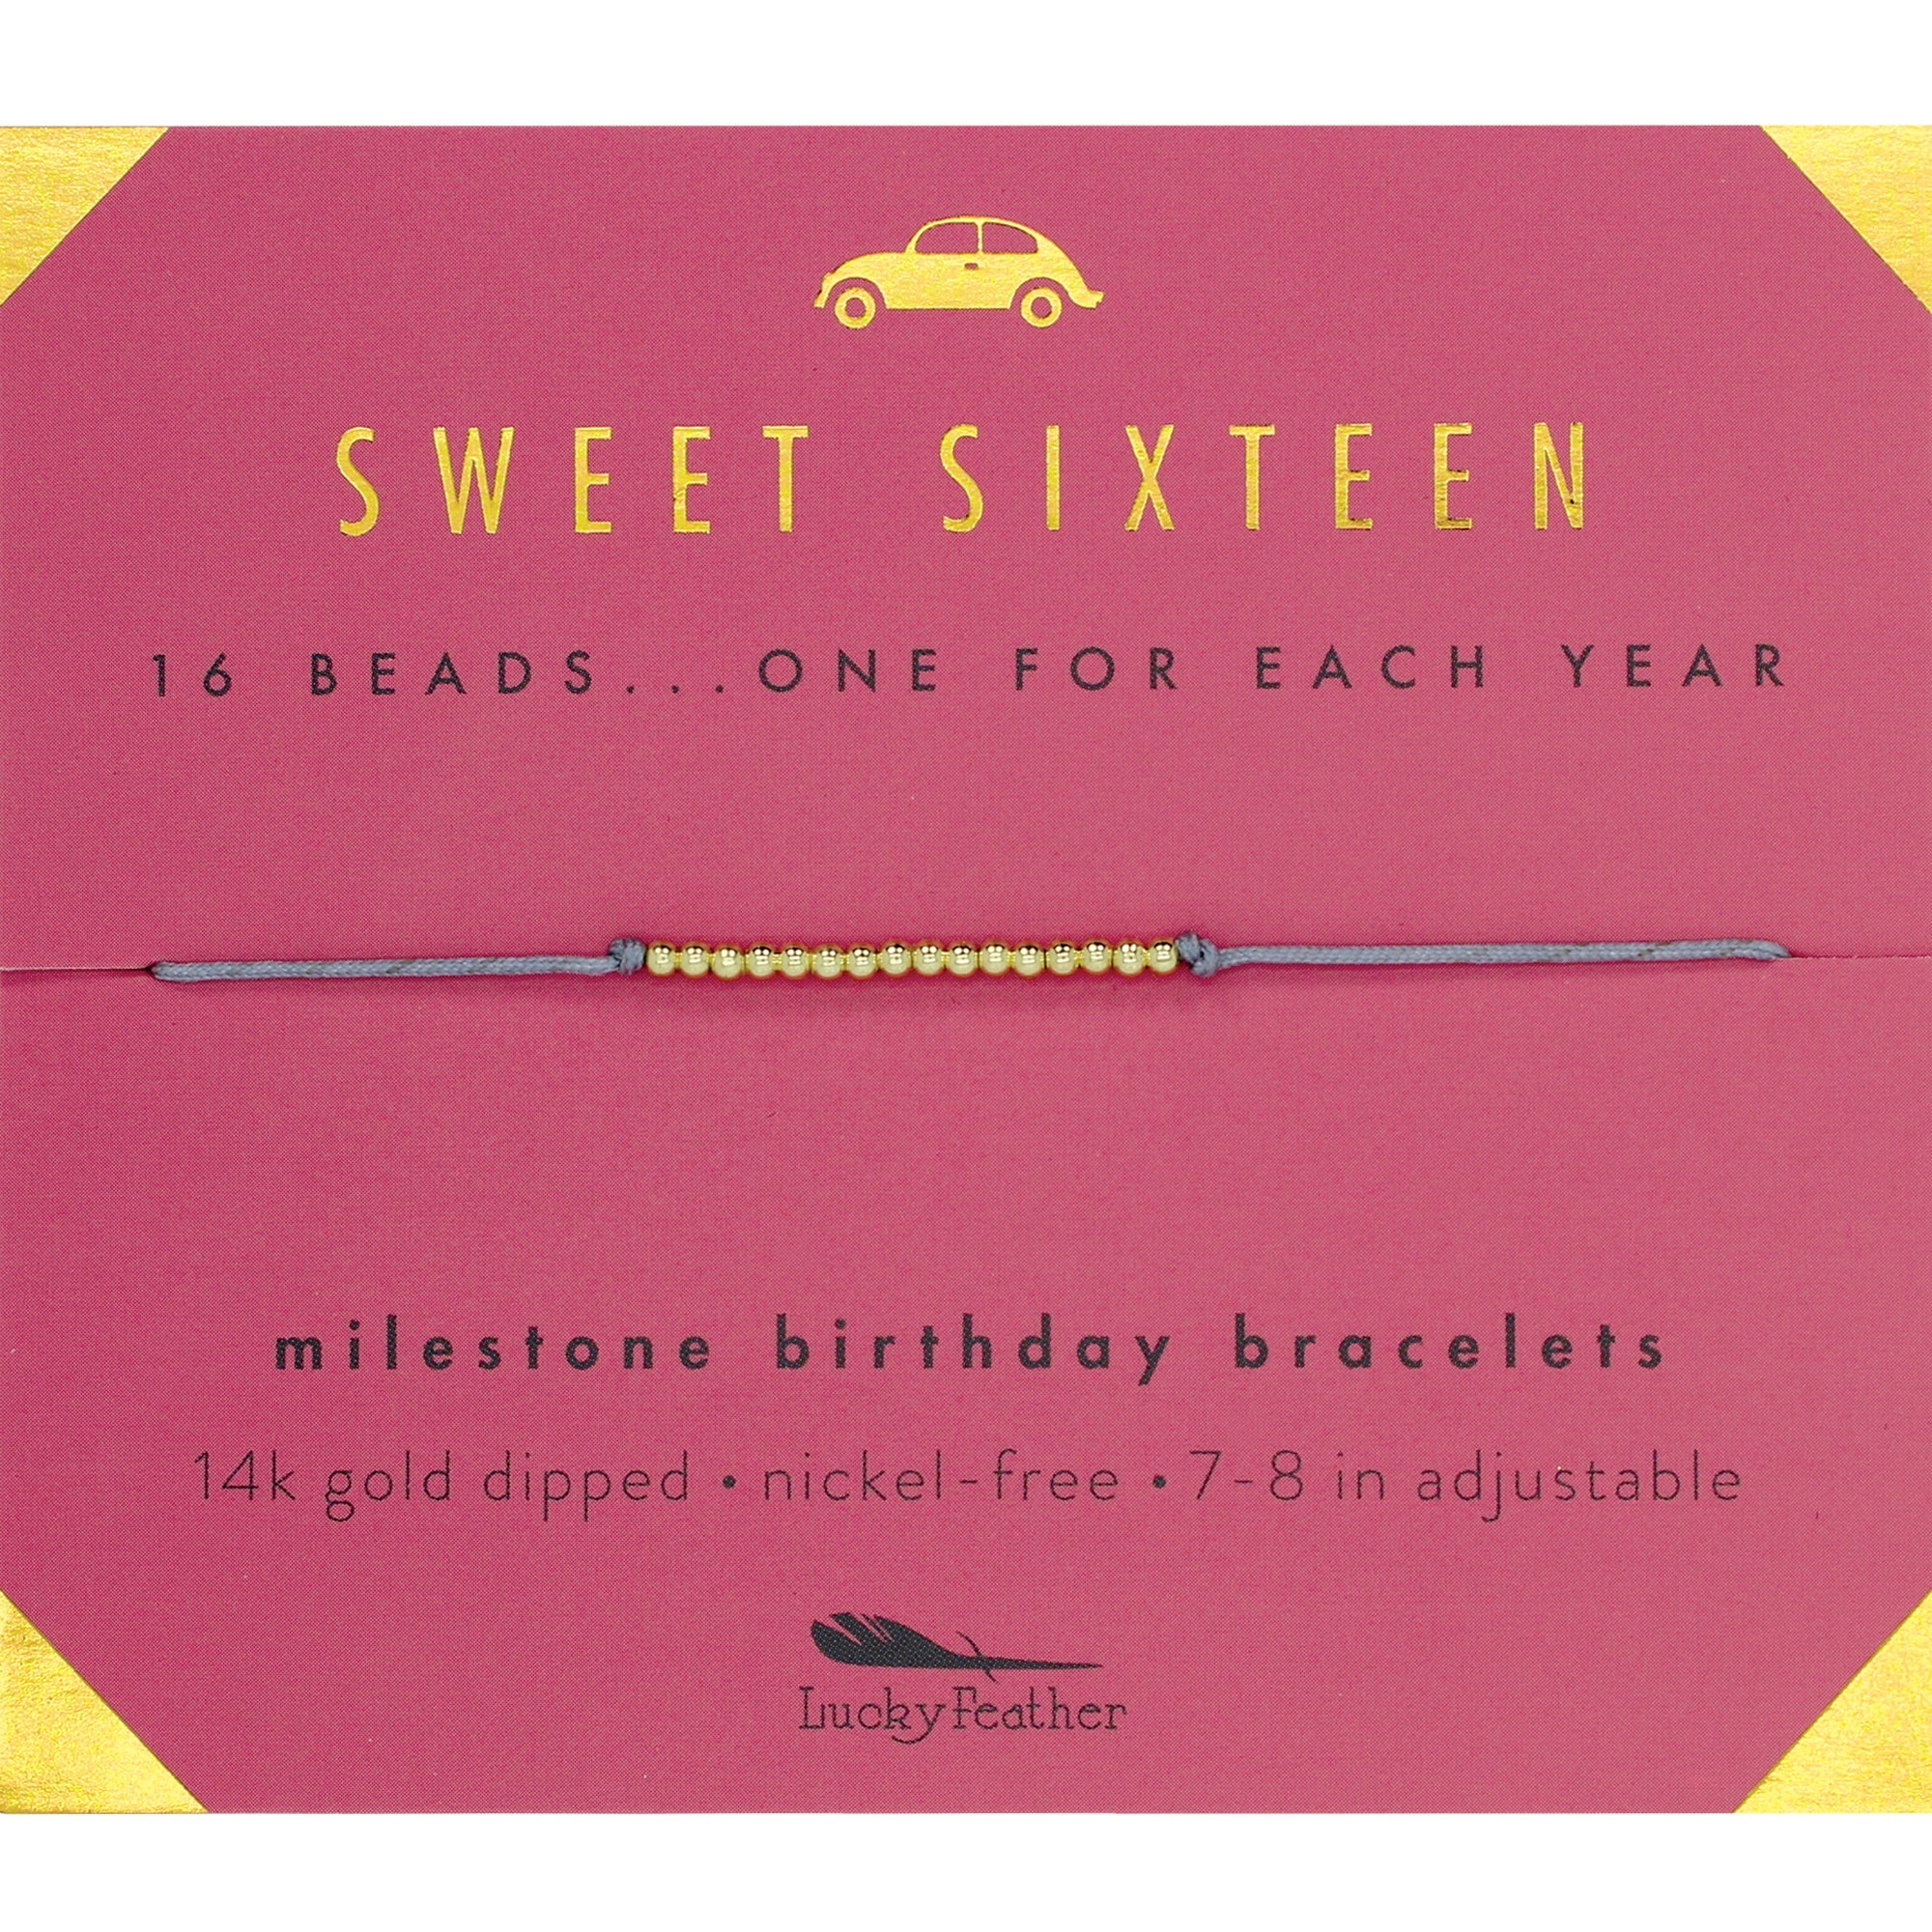 Milestone Birthday Bracelet - Sweet Sixteen by Lucky Feather